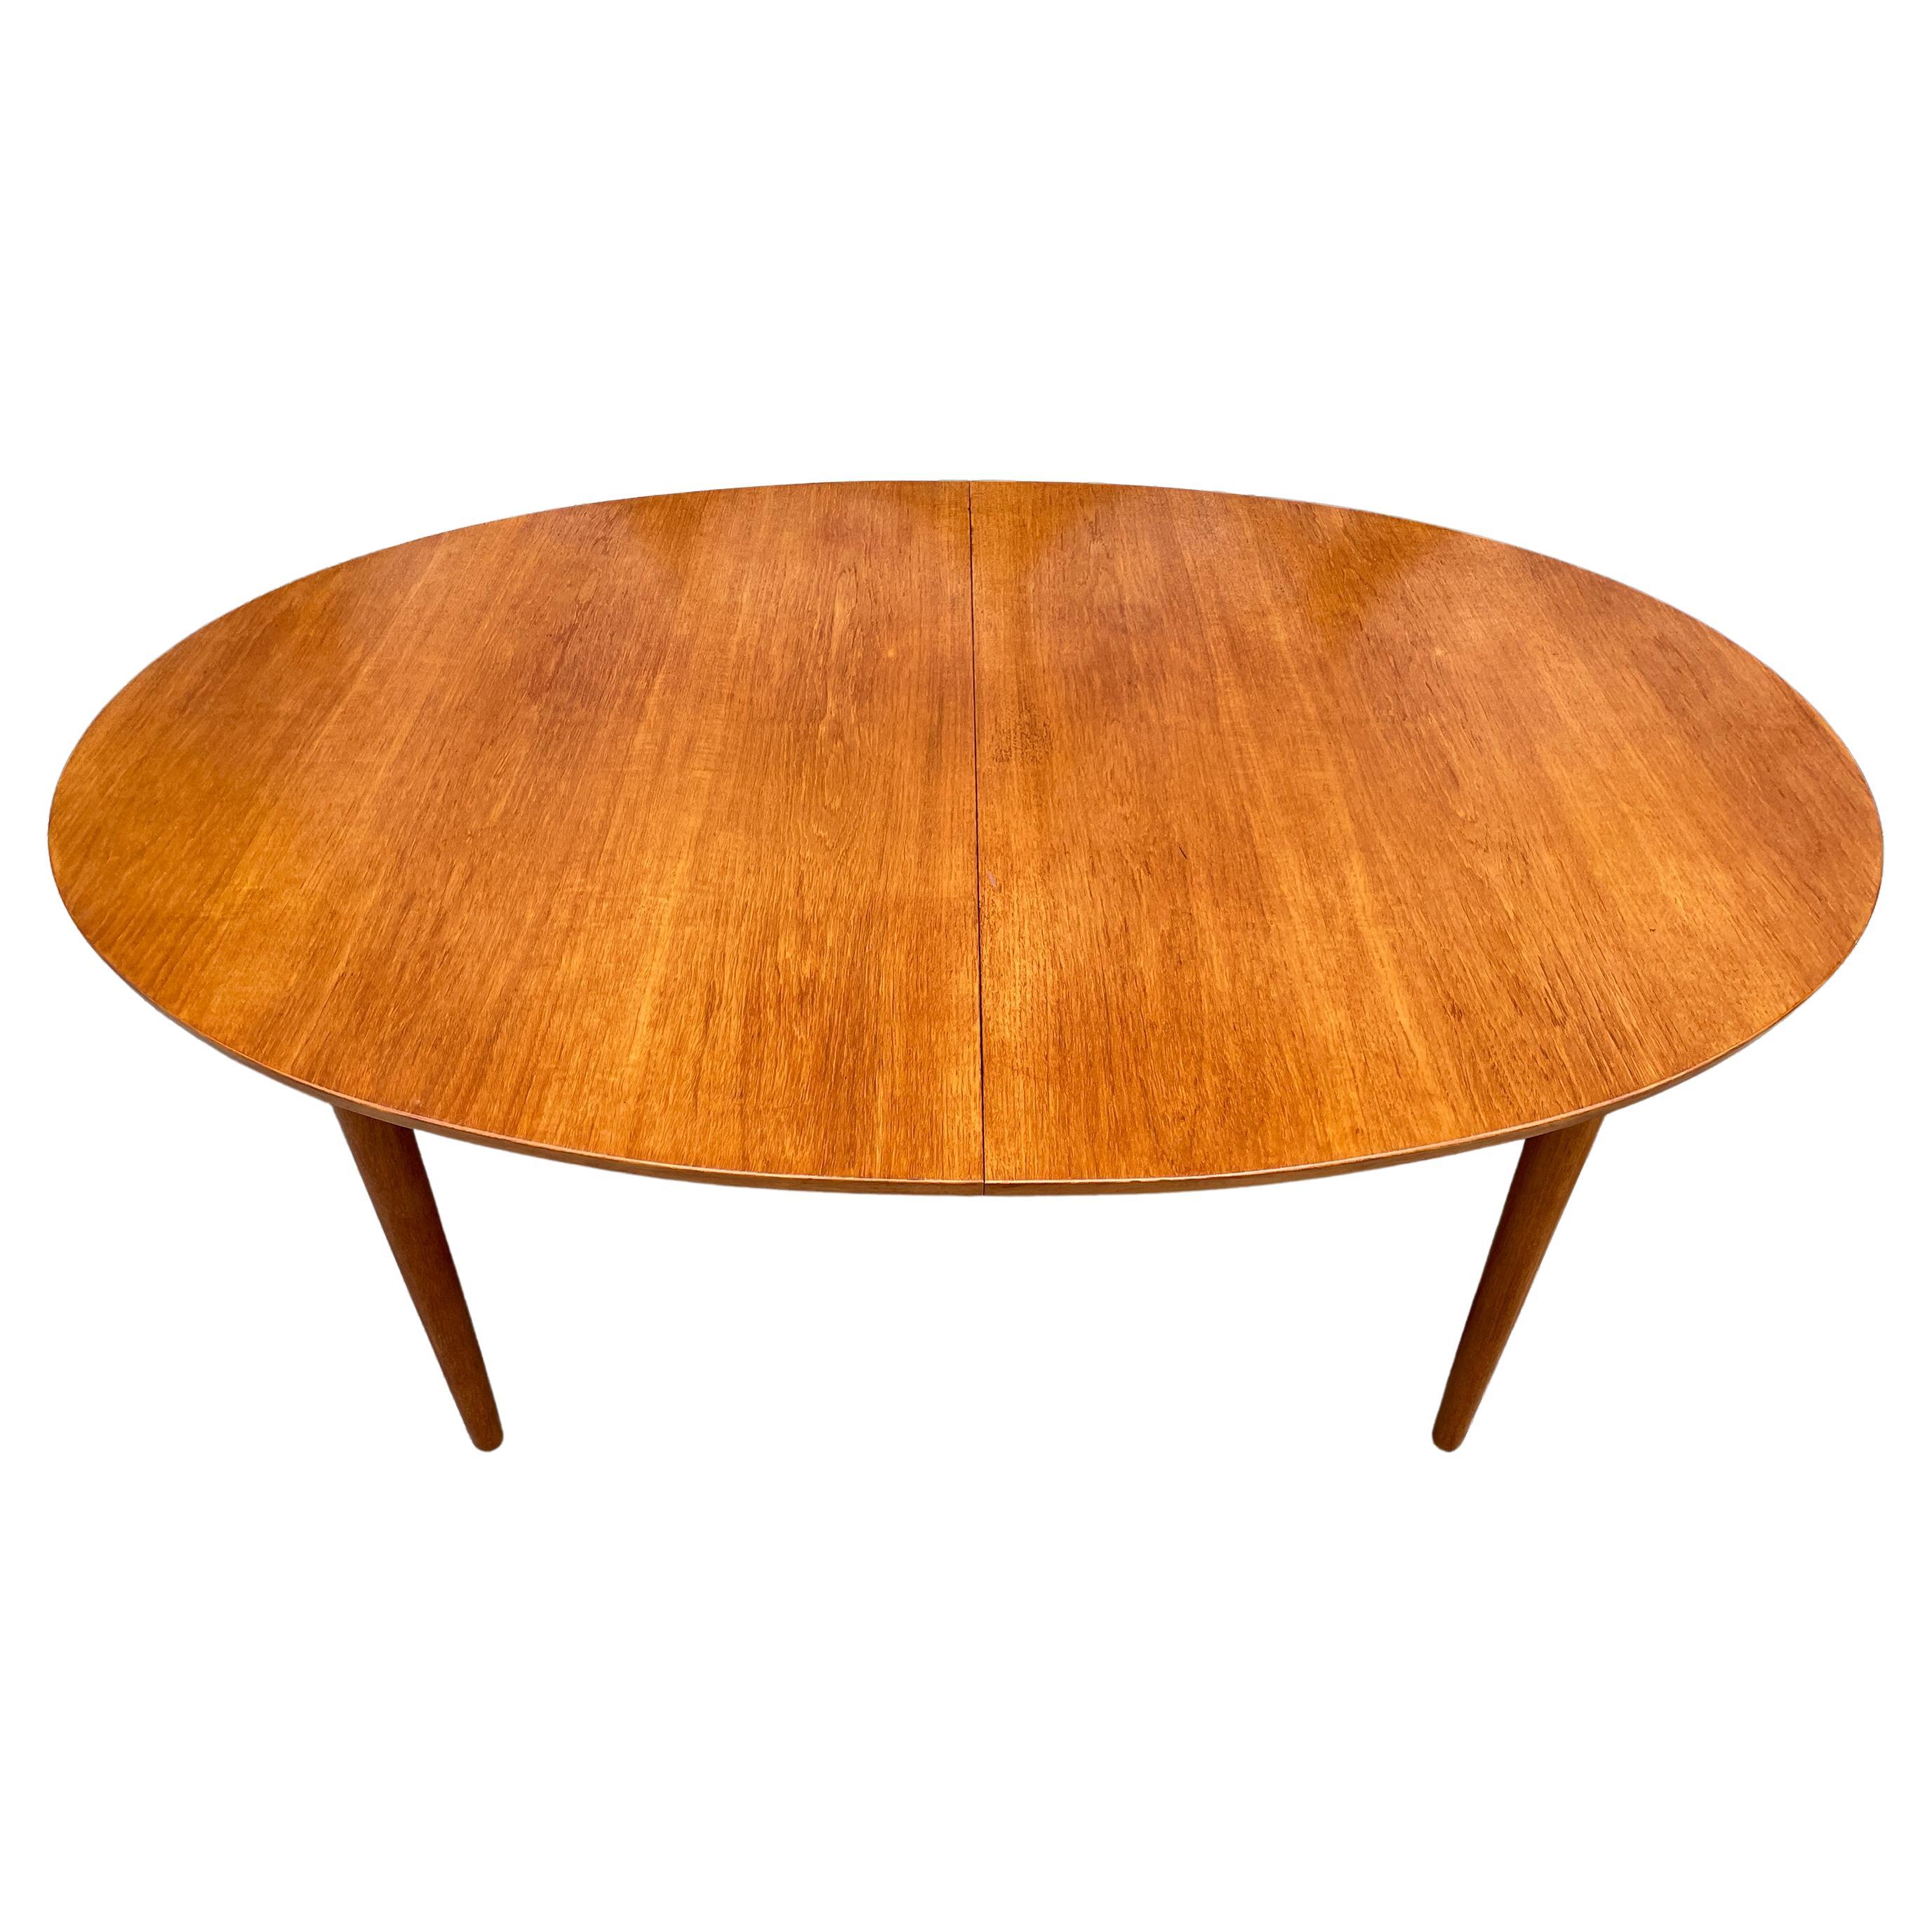 Woodwork Superb Mid Century Oval Teak Danish Modern Extension Dining Table 2 Leaves